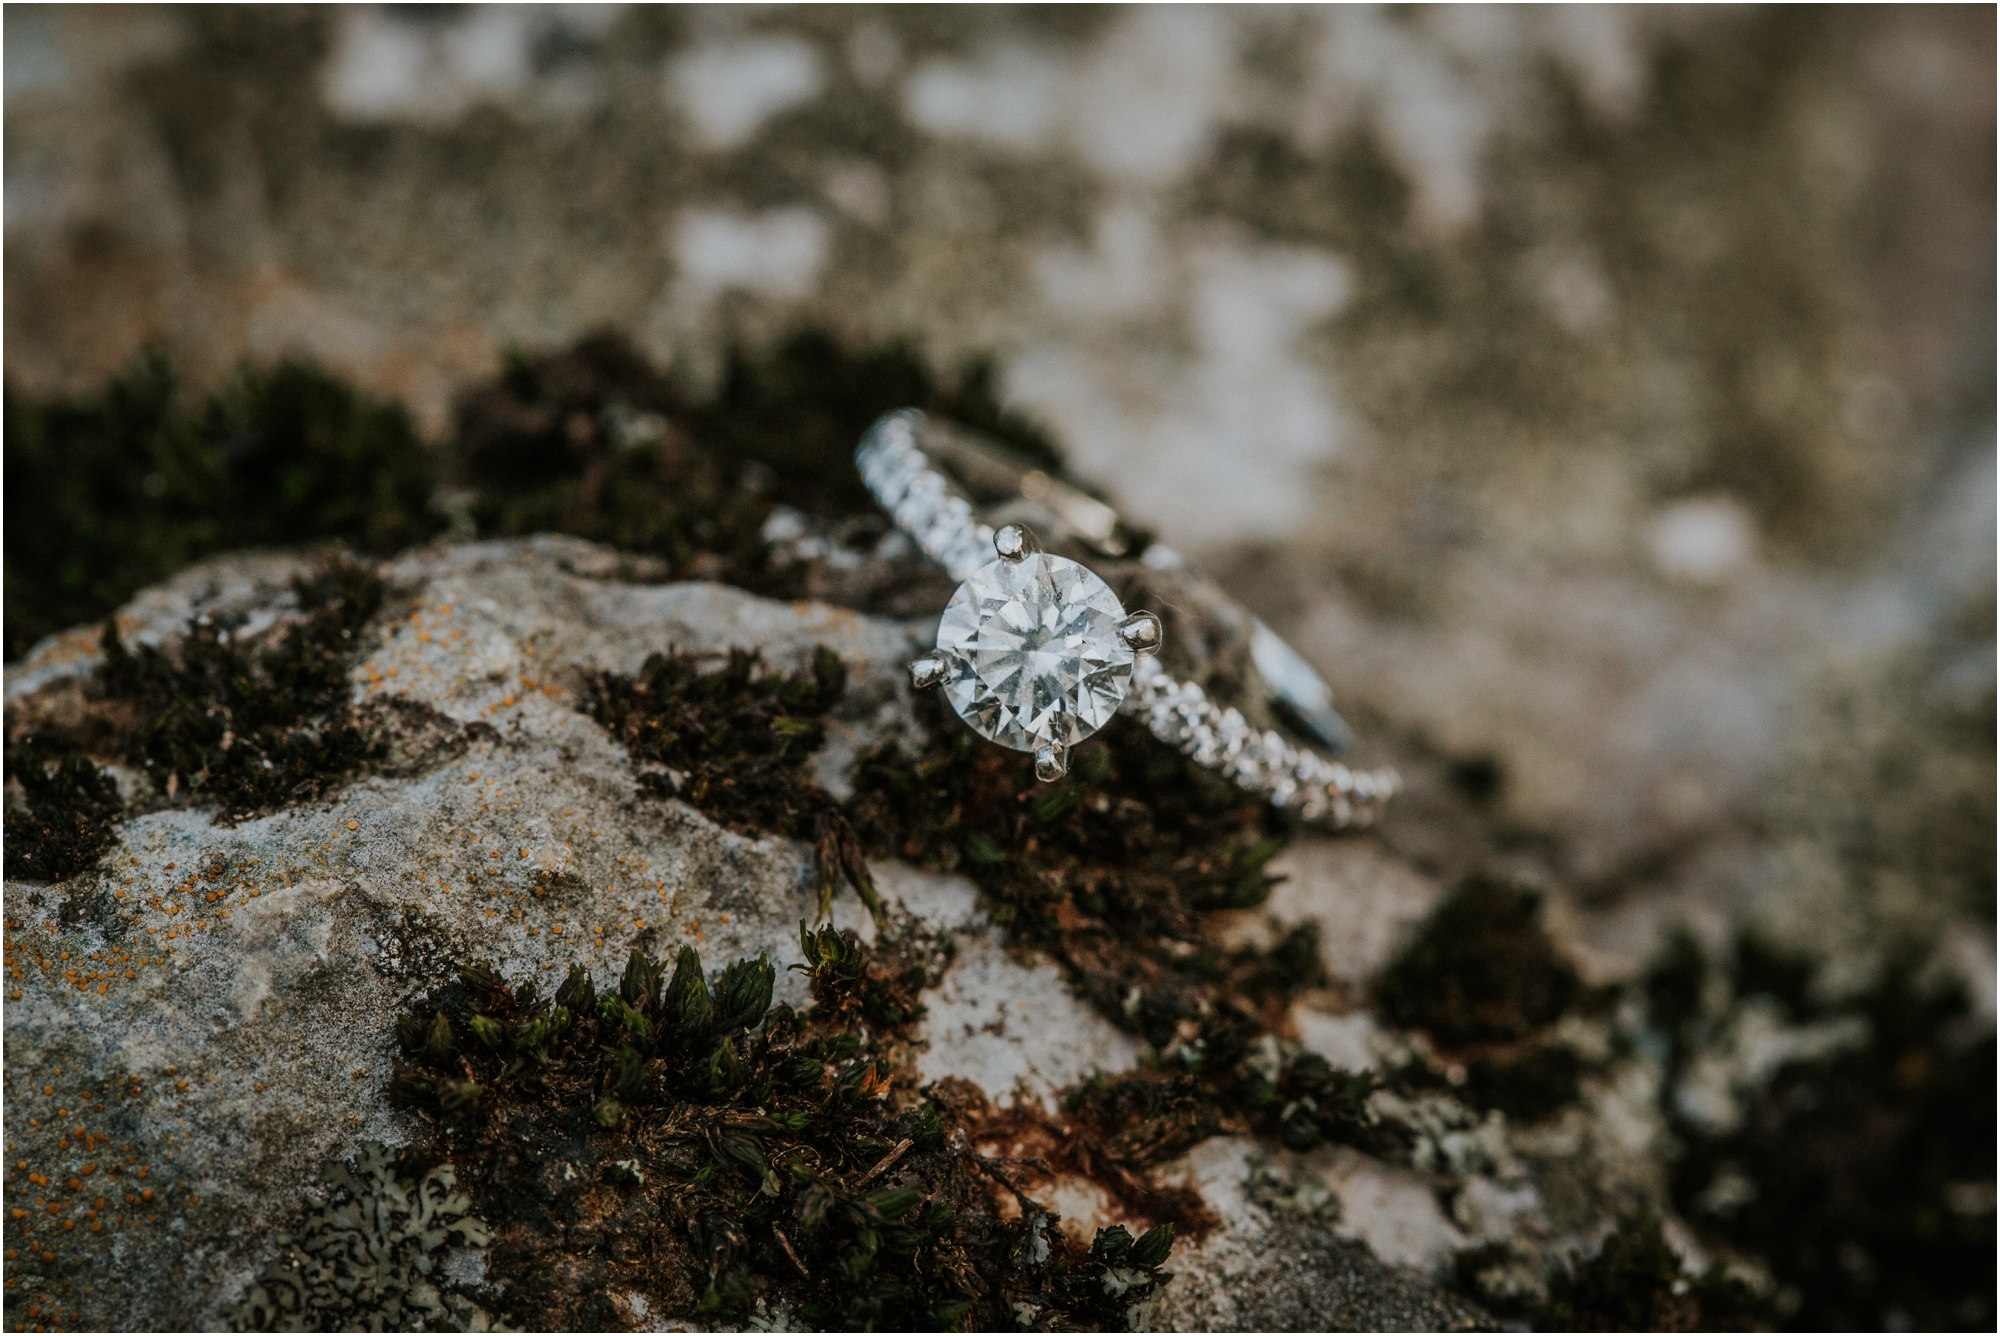 katy-sergent-millstone-limestone-tn-rustic-fall-engagement-session-adventurous-outdoors-intimate-elopement-wedding-northeast-johnson-city-photographer_0006.jpg